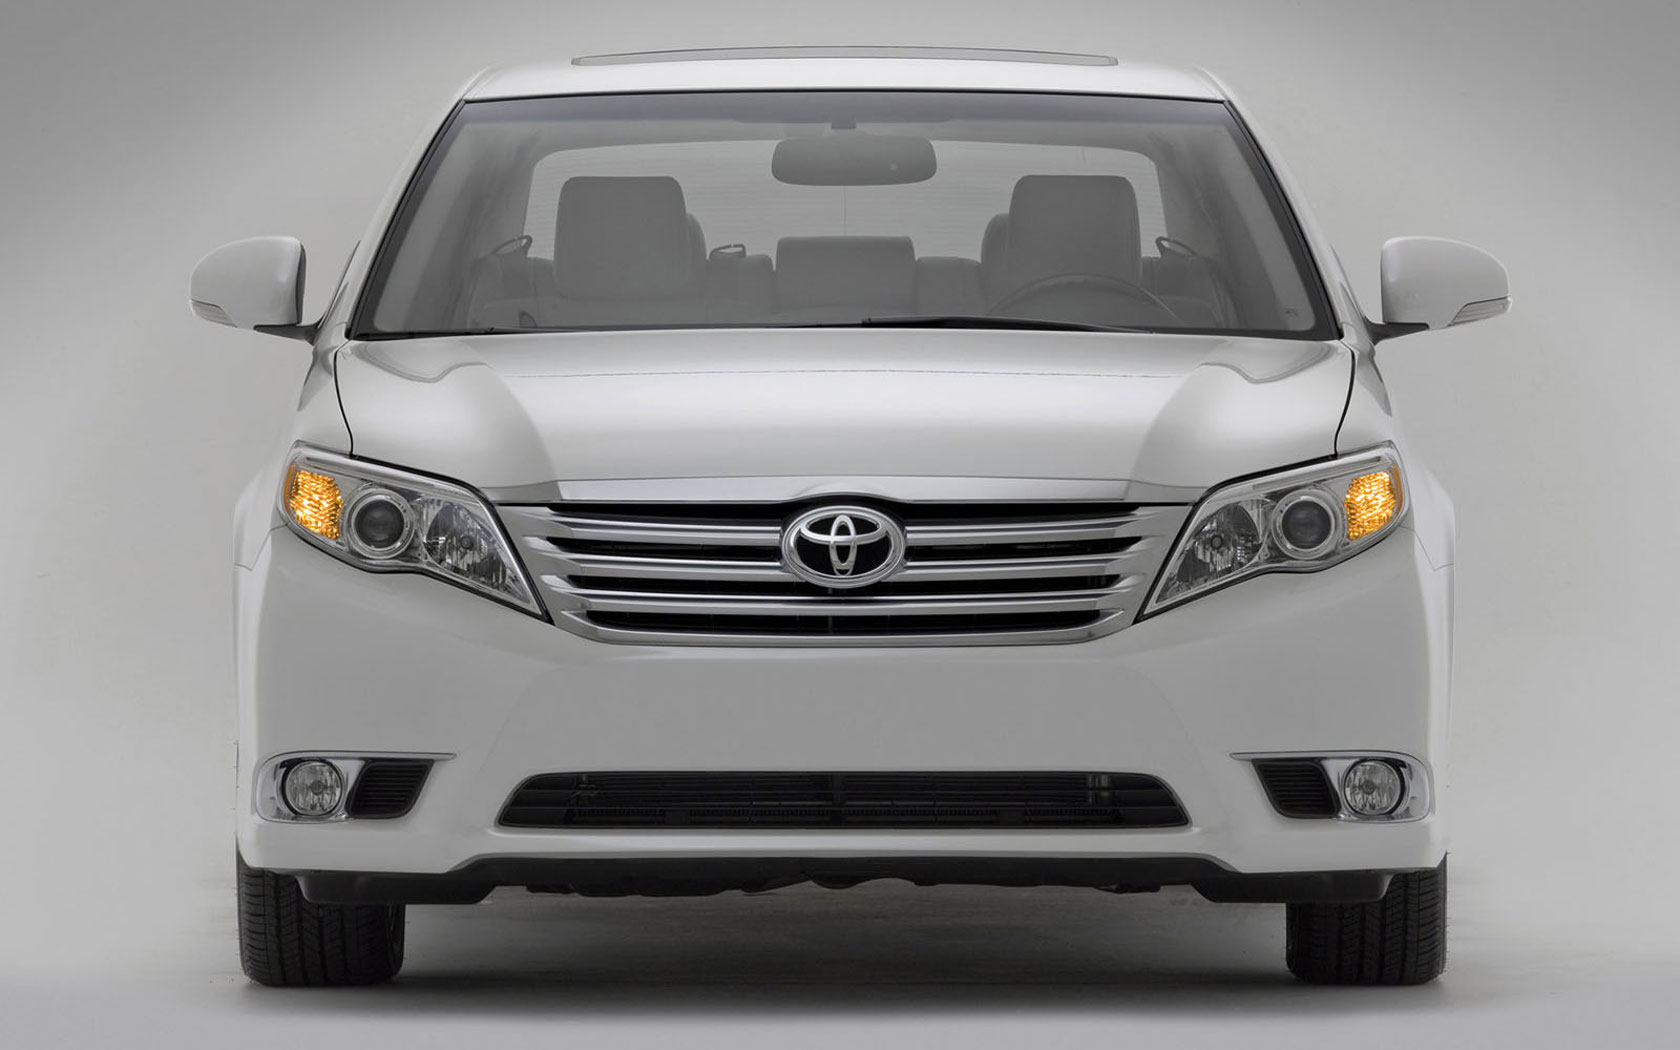  Toyota Avalon (2010-2011)